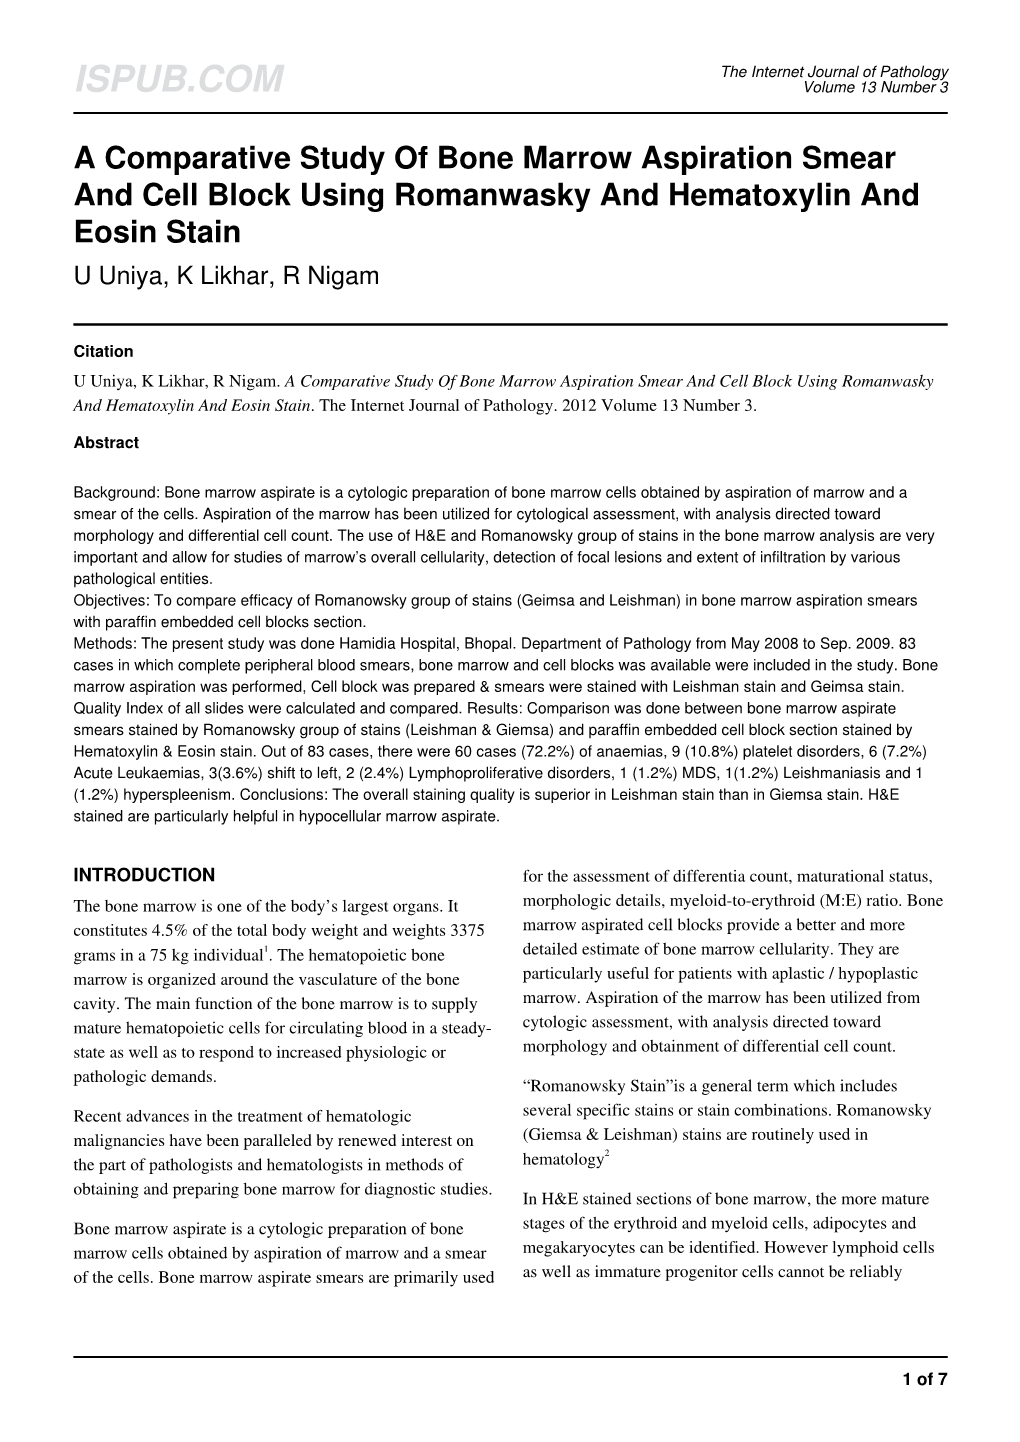 A Comparative Study of Bone Marrow Aspiration Smear and Cell Block Using Romanwasky and Hematoxylin and Eosin Stain U Uniya, K Likhar, R Nigam